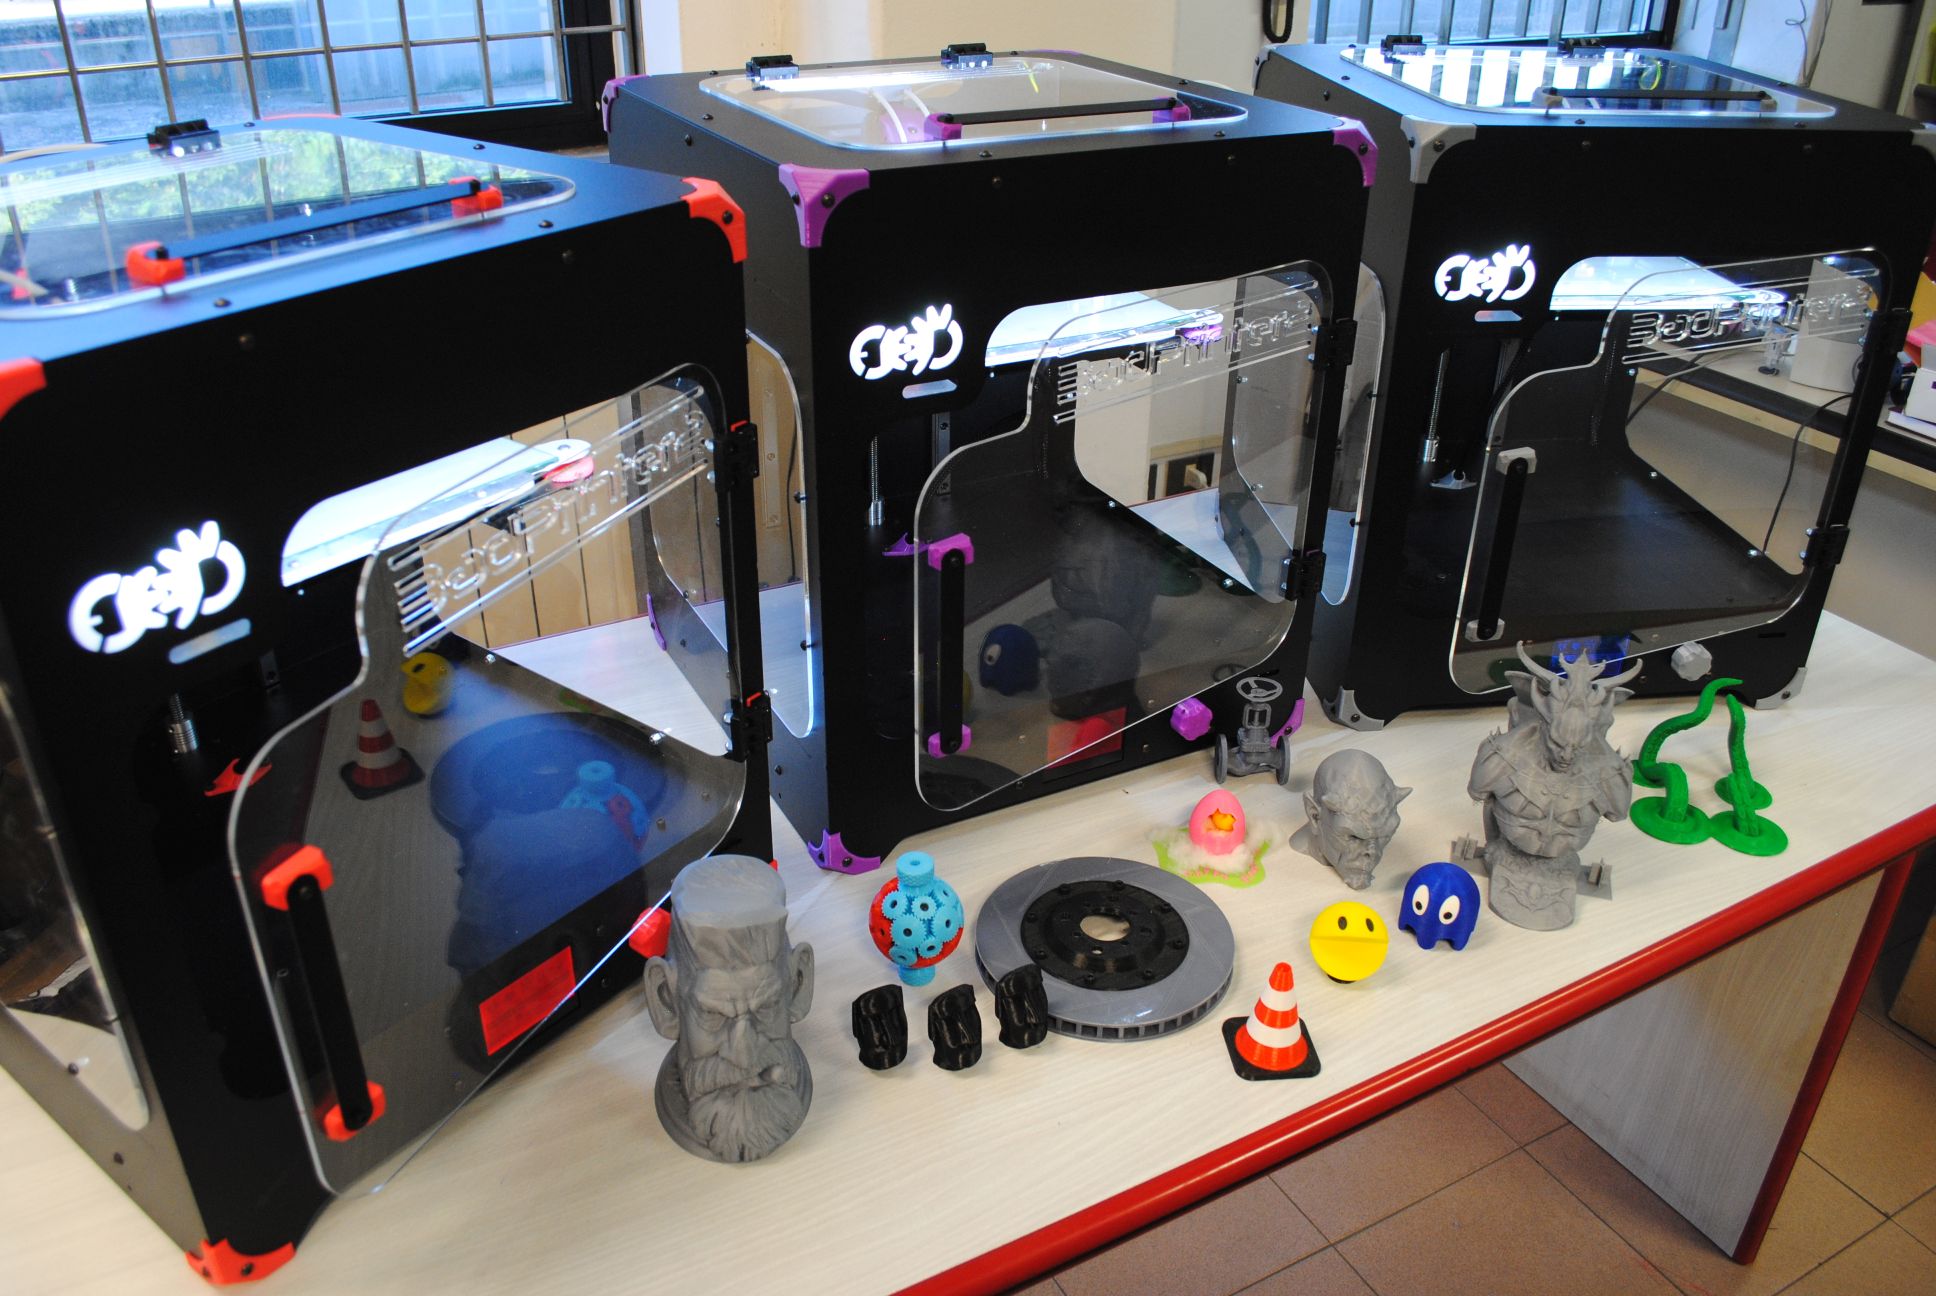 http://3dprintingindustry.com/wp-content/uploads/2014/10/BadPrinter2-3D-Printer.jpg